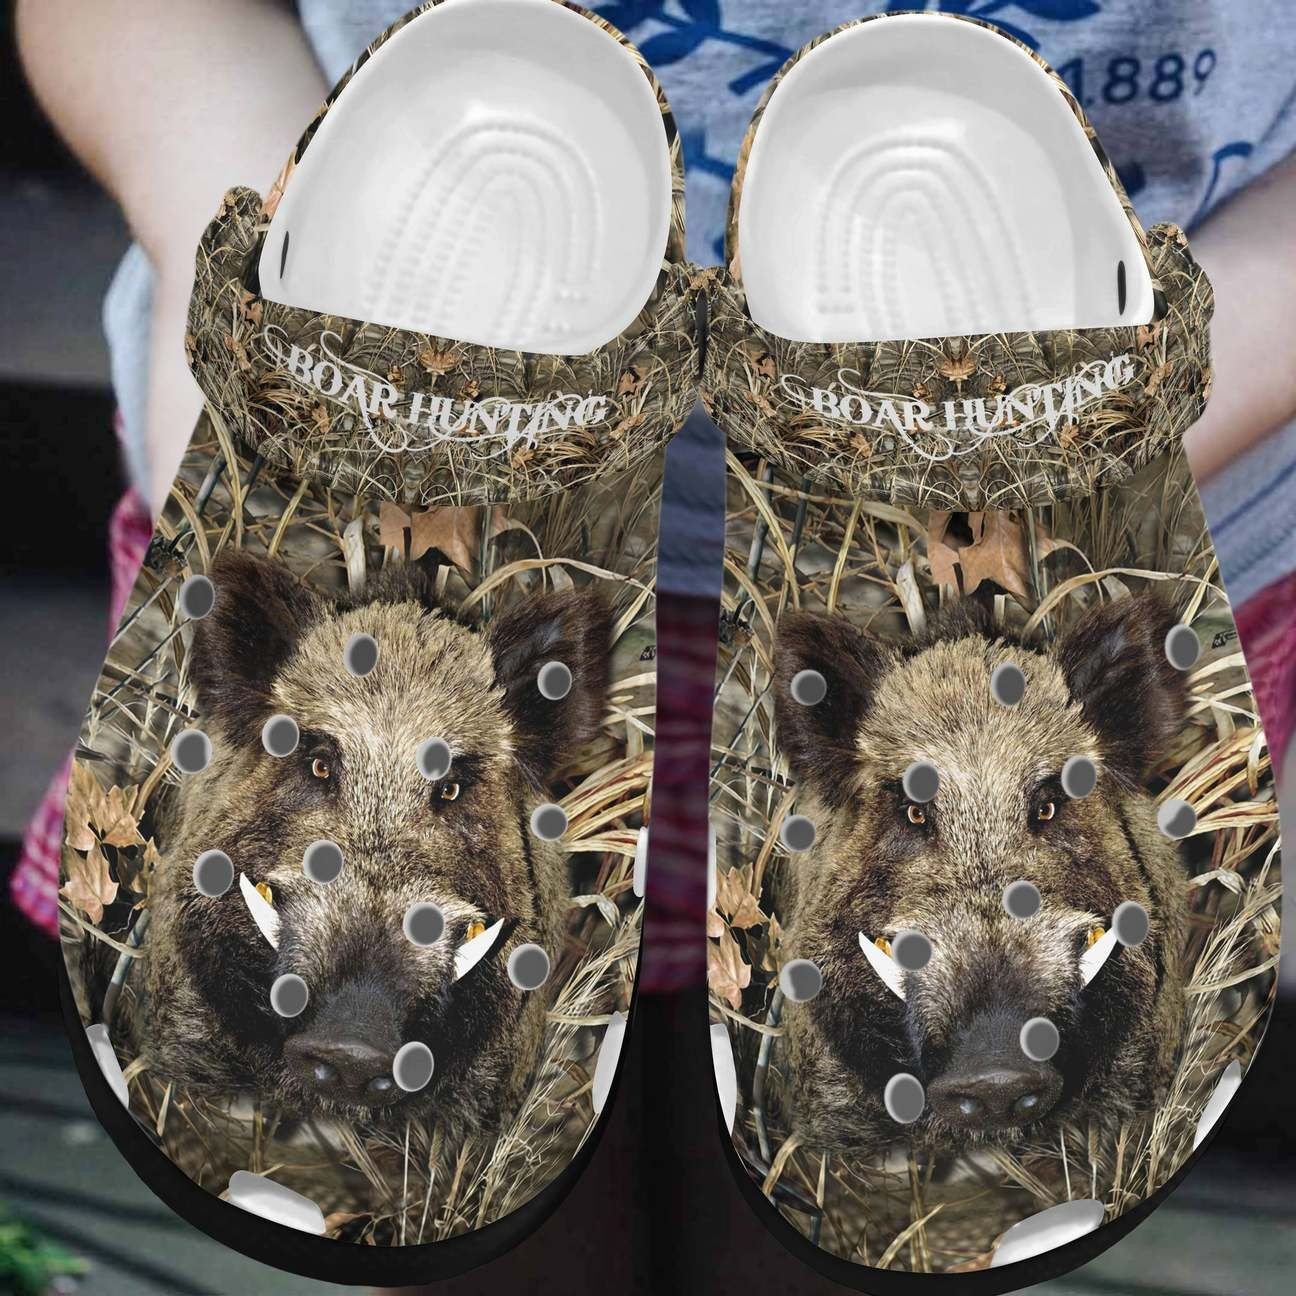 Hunting Personalized Clog Custom Crocs Comfortablefashion Style Comfortable For Women Men Kid Print 3D Boar Hunting